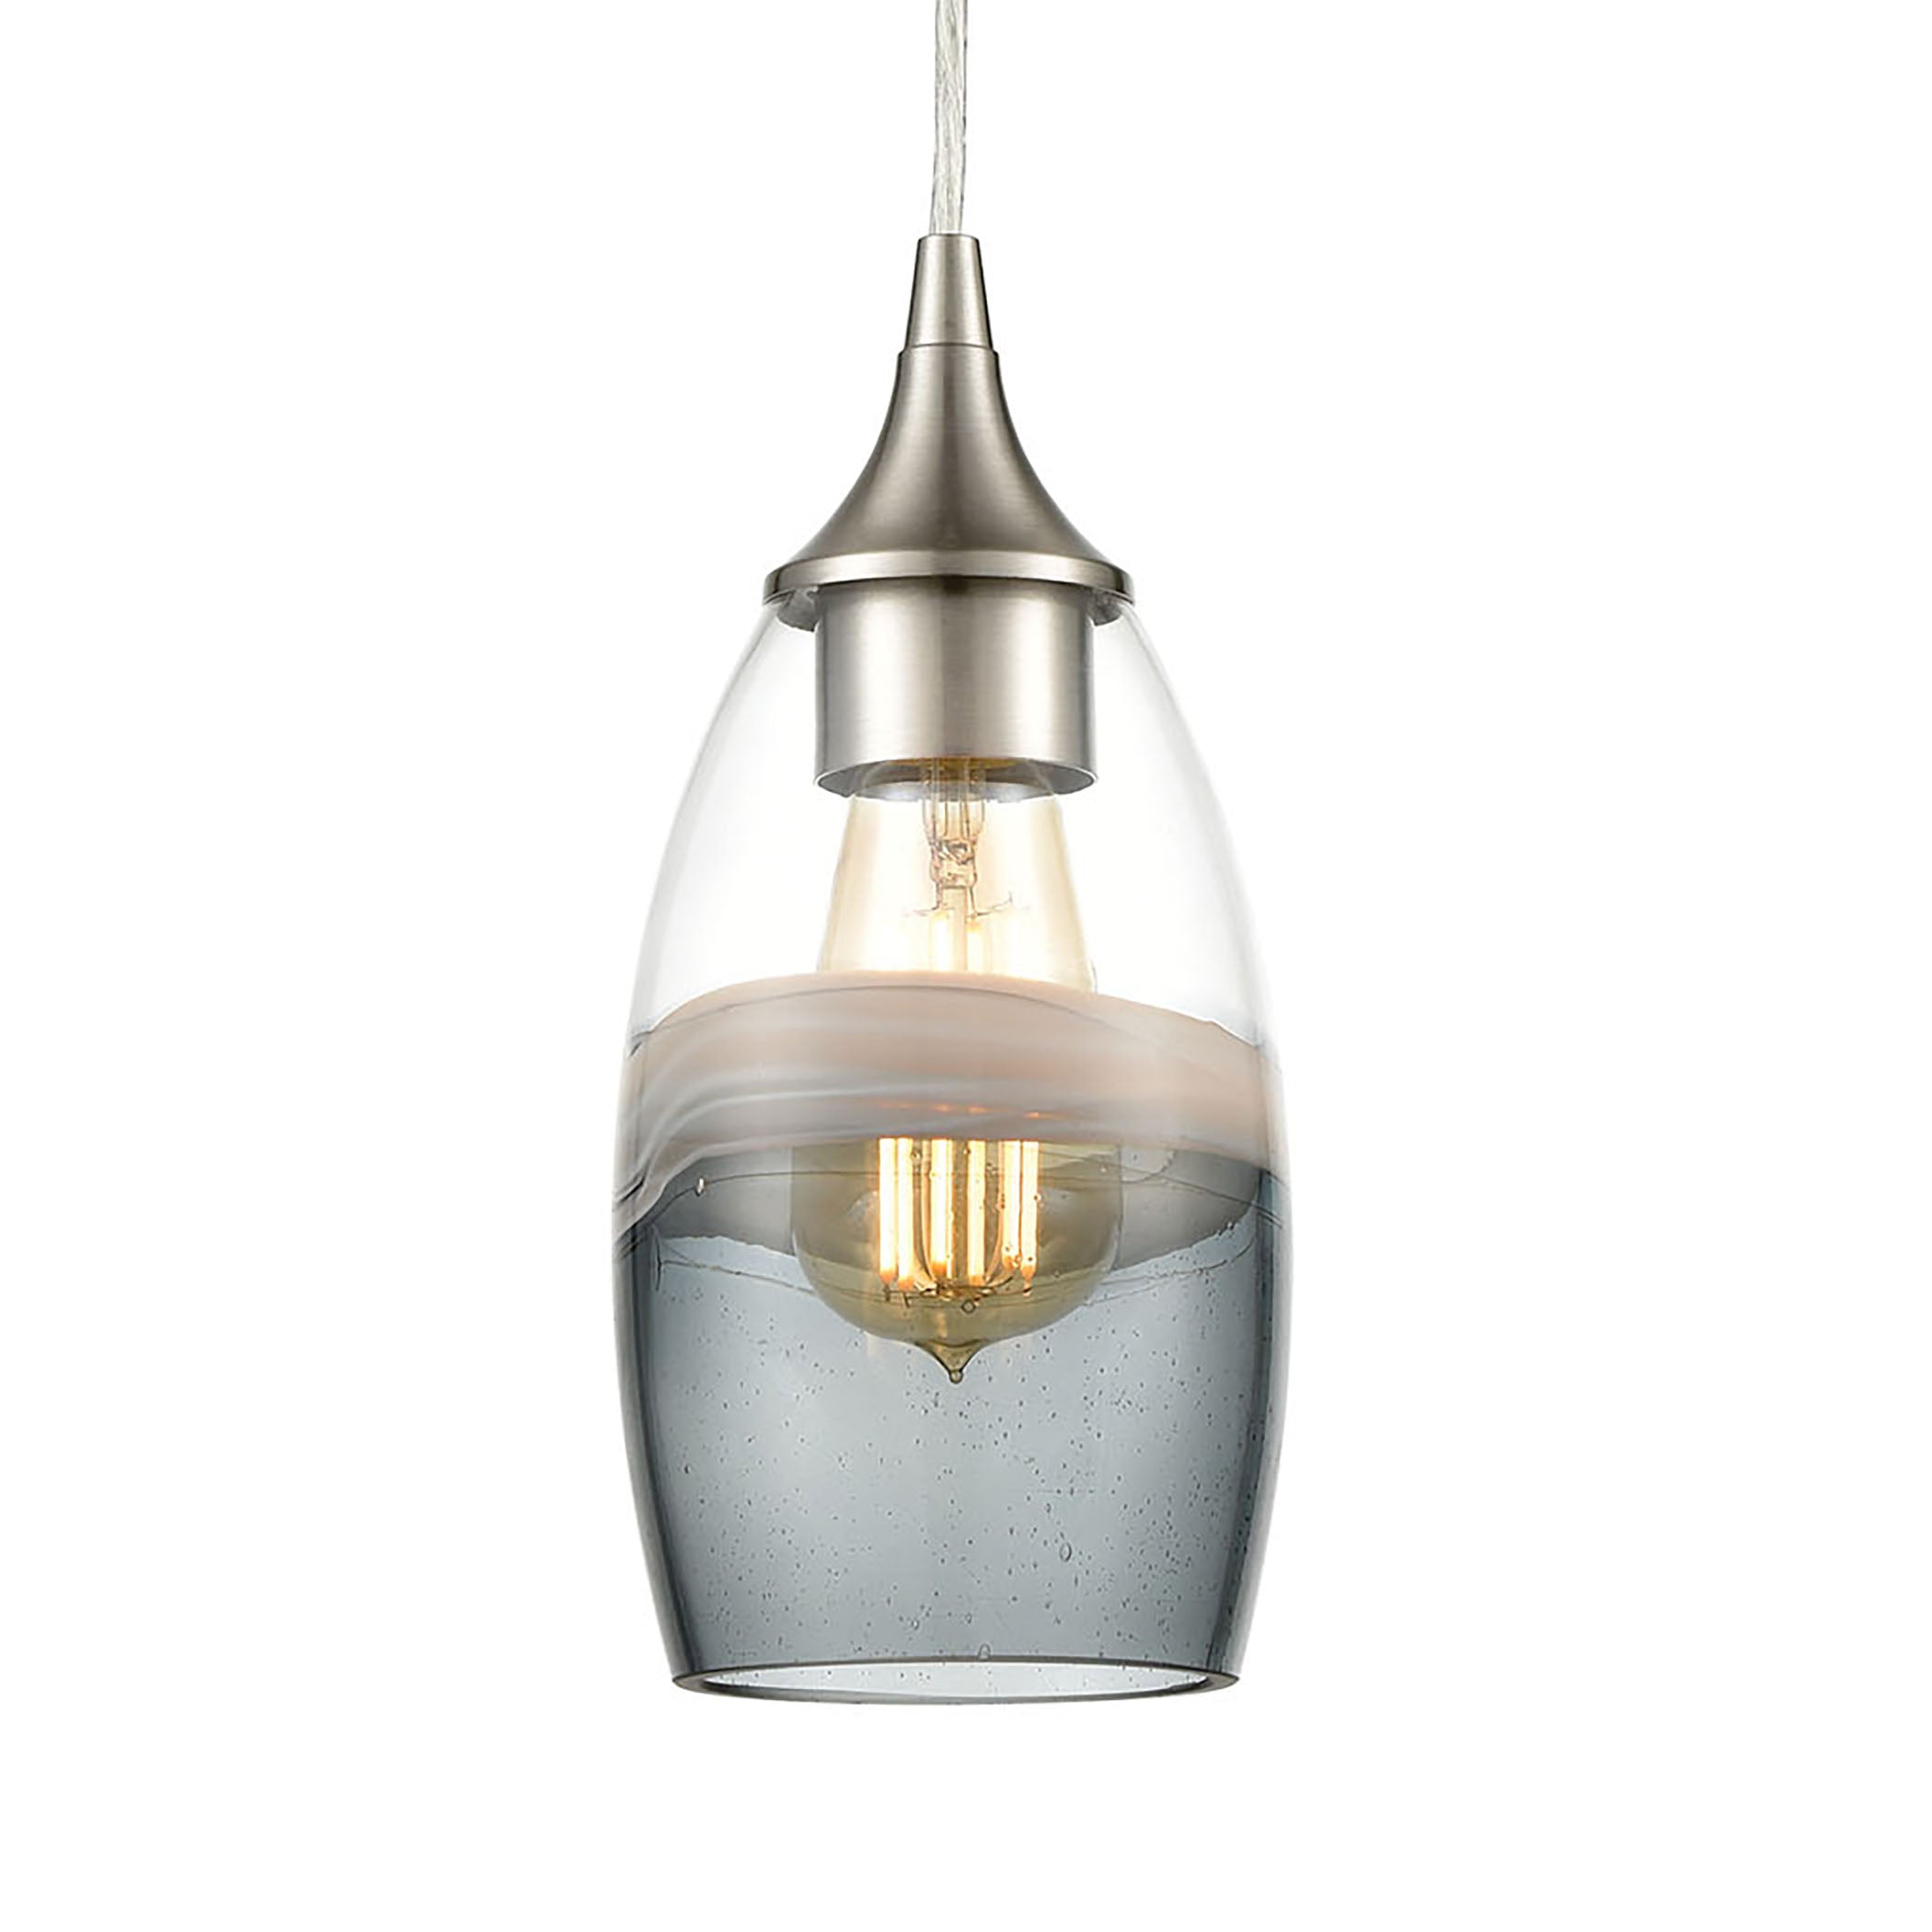 ELK Lighting 25098/1 Sutter Creek 1-Light Mini Pendant in Satin Nickel with Clear, Grey, and Smoke Seedy Glass